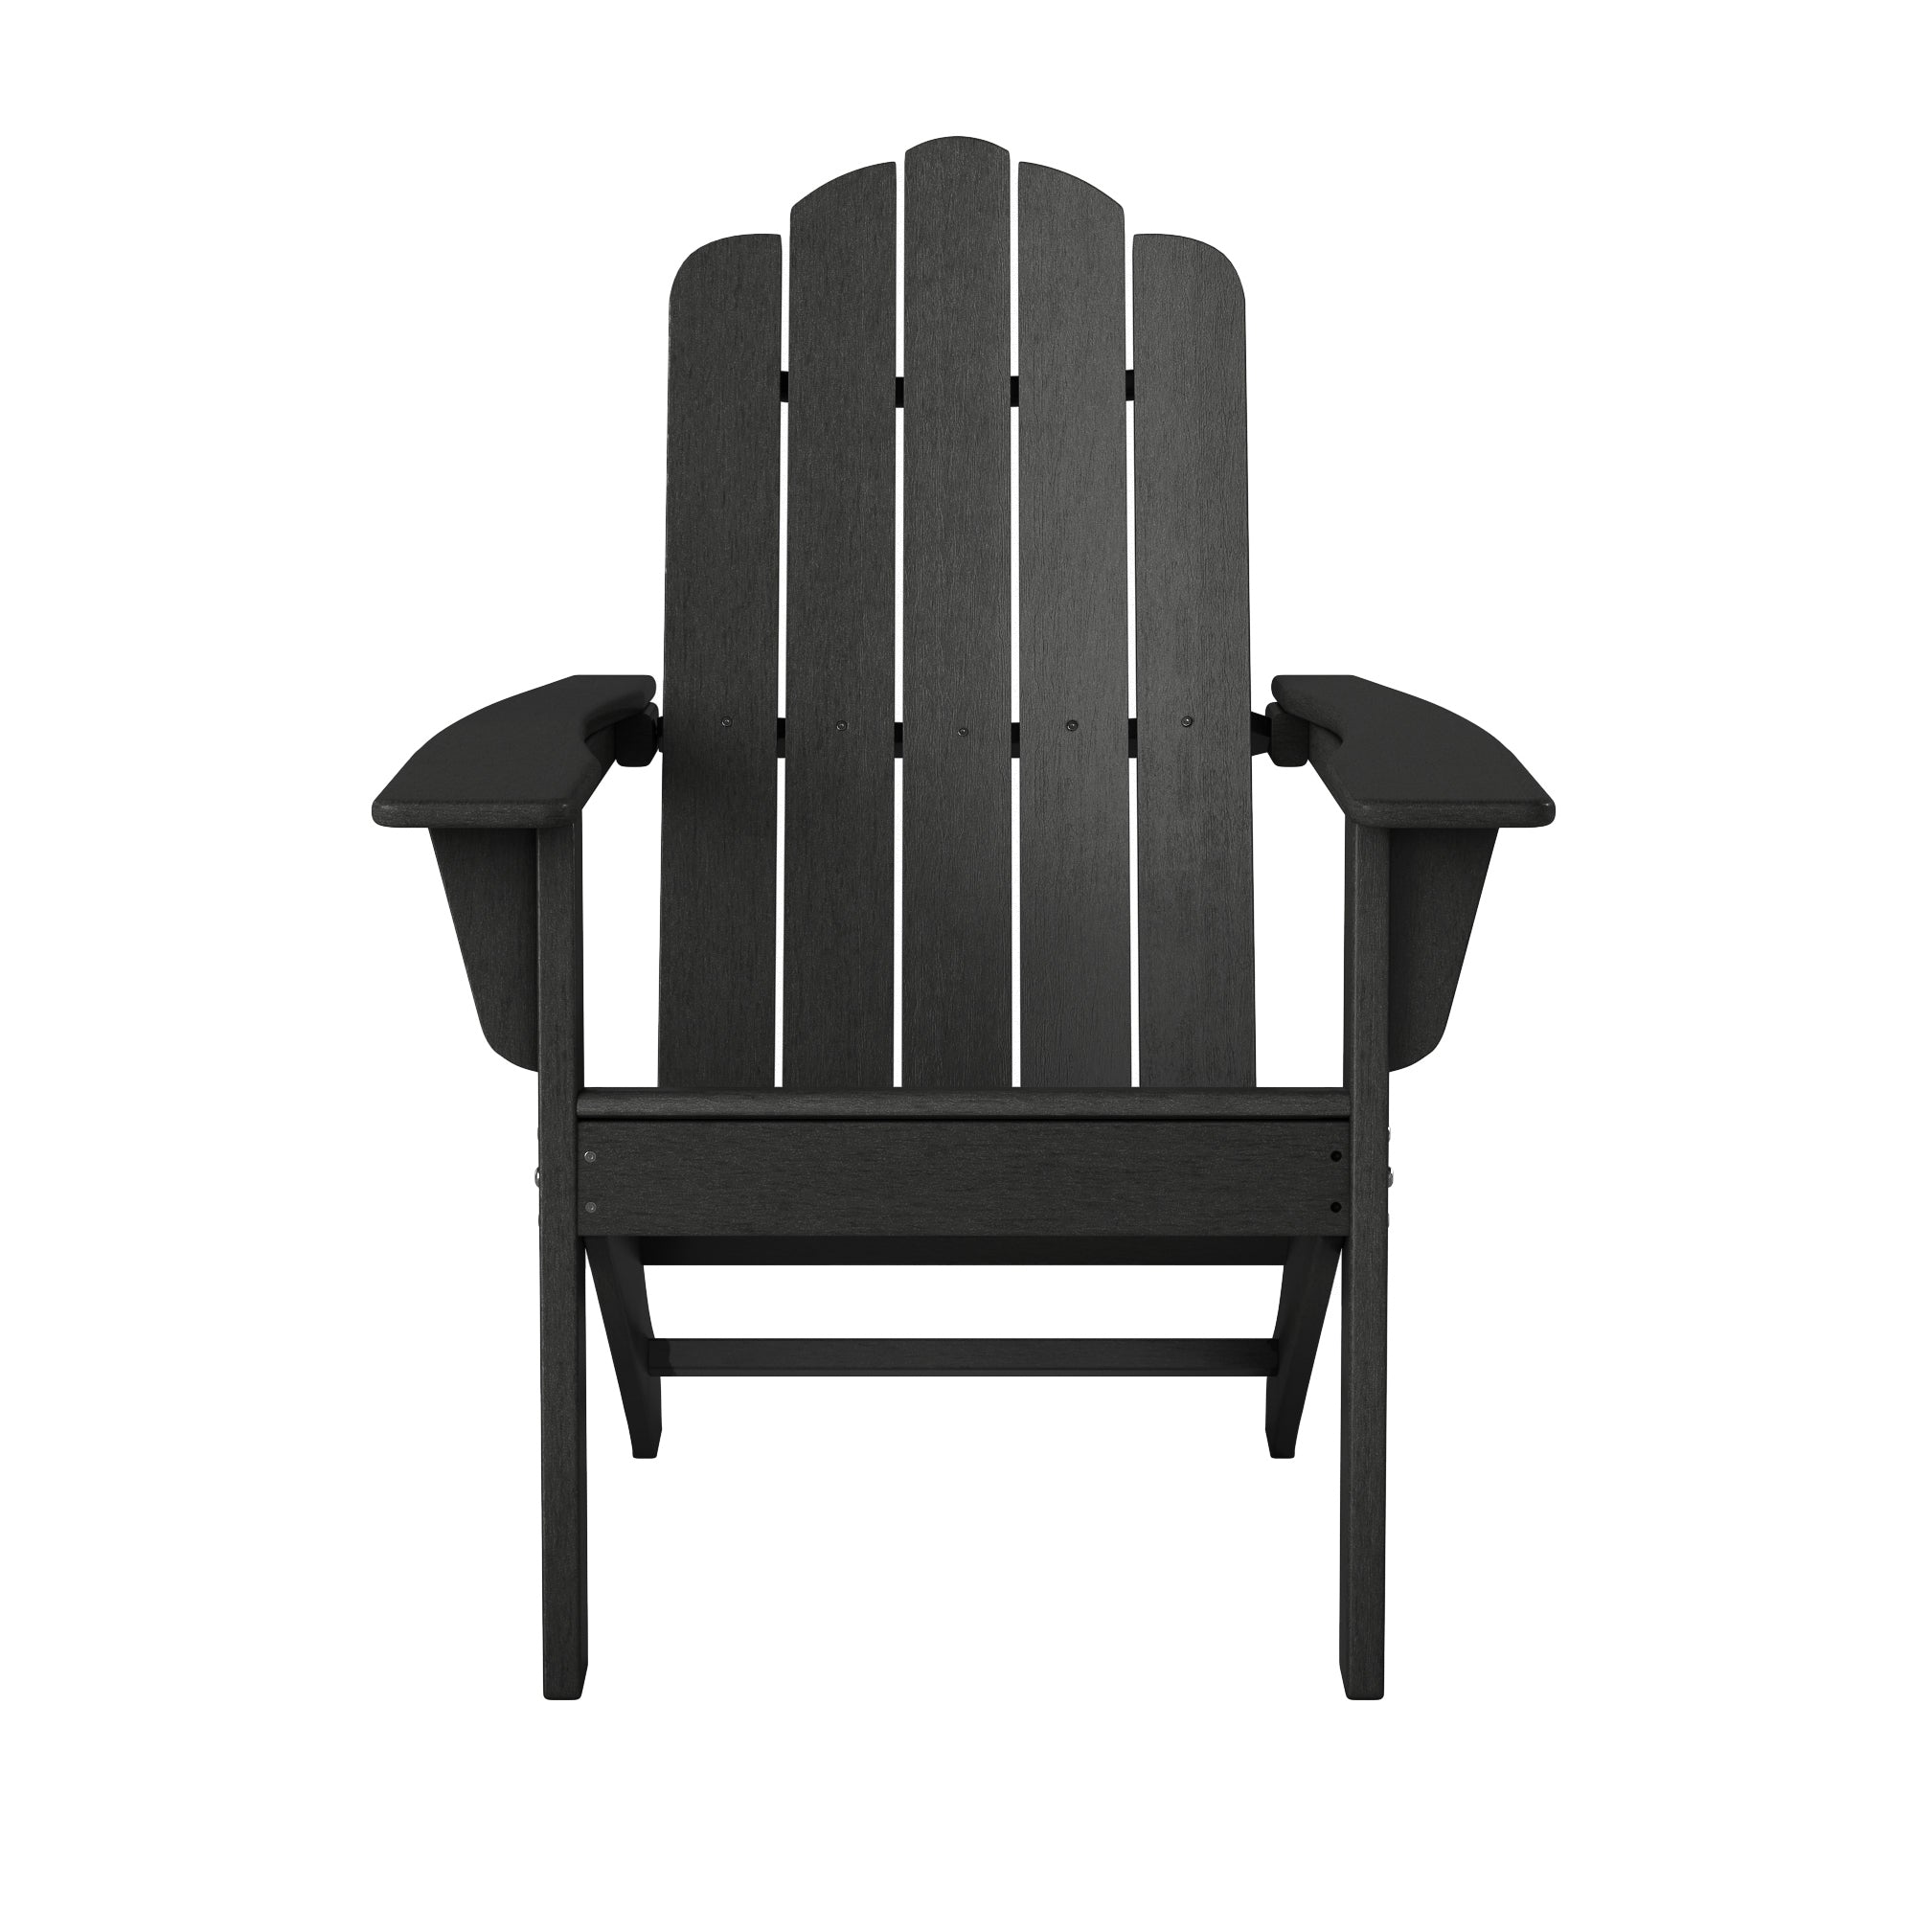 Marina HDPE Outdoor Adirondack Chair